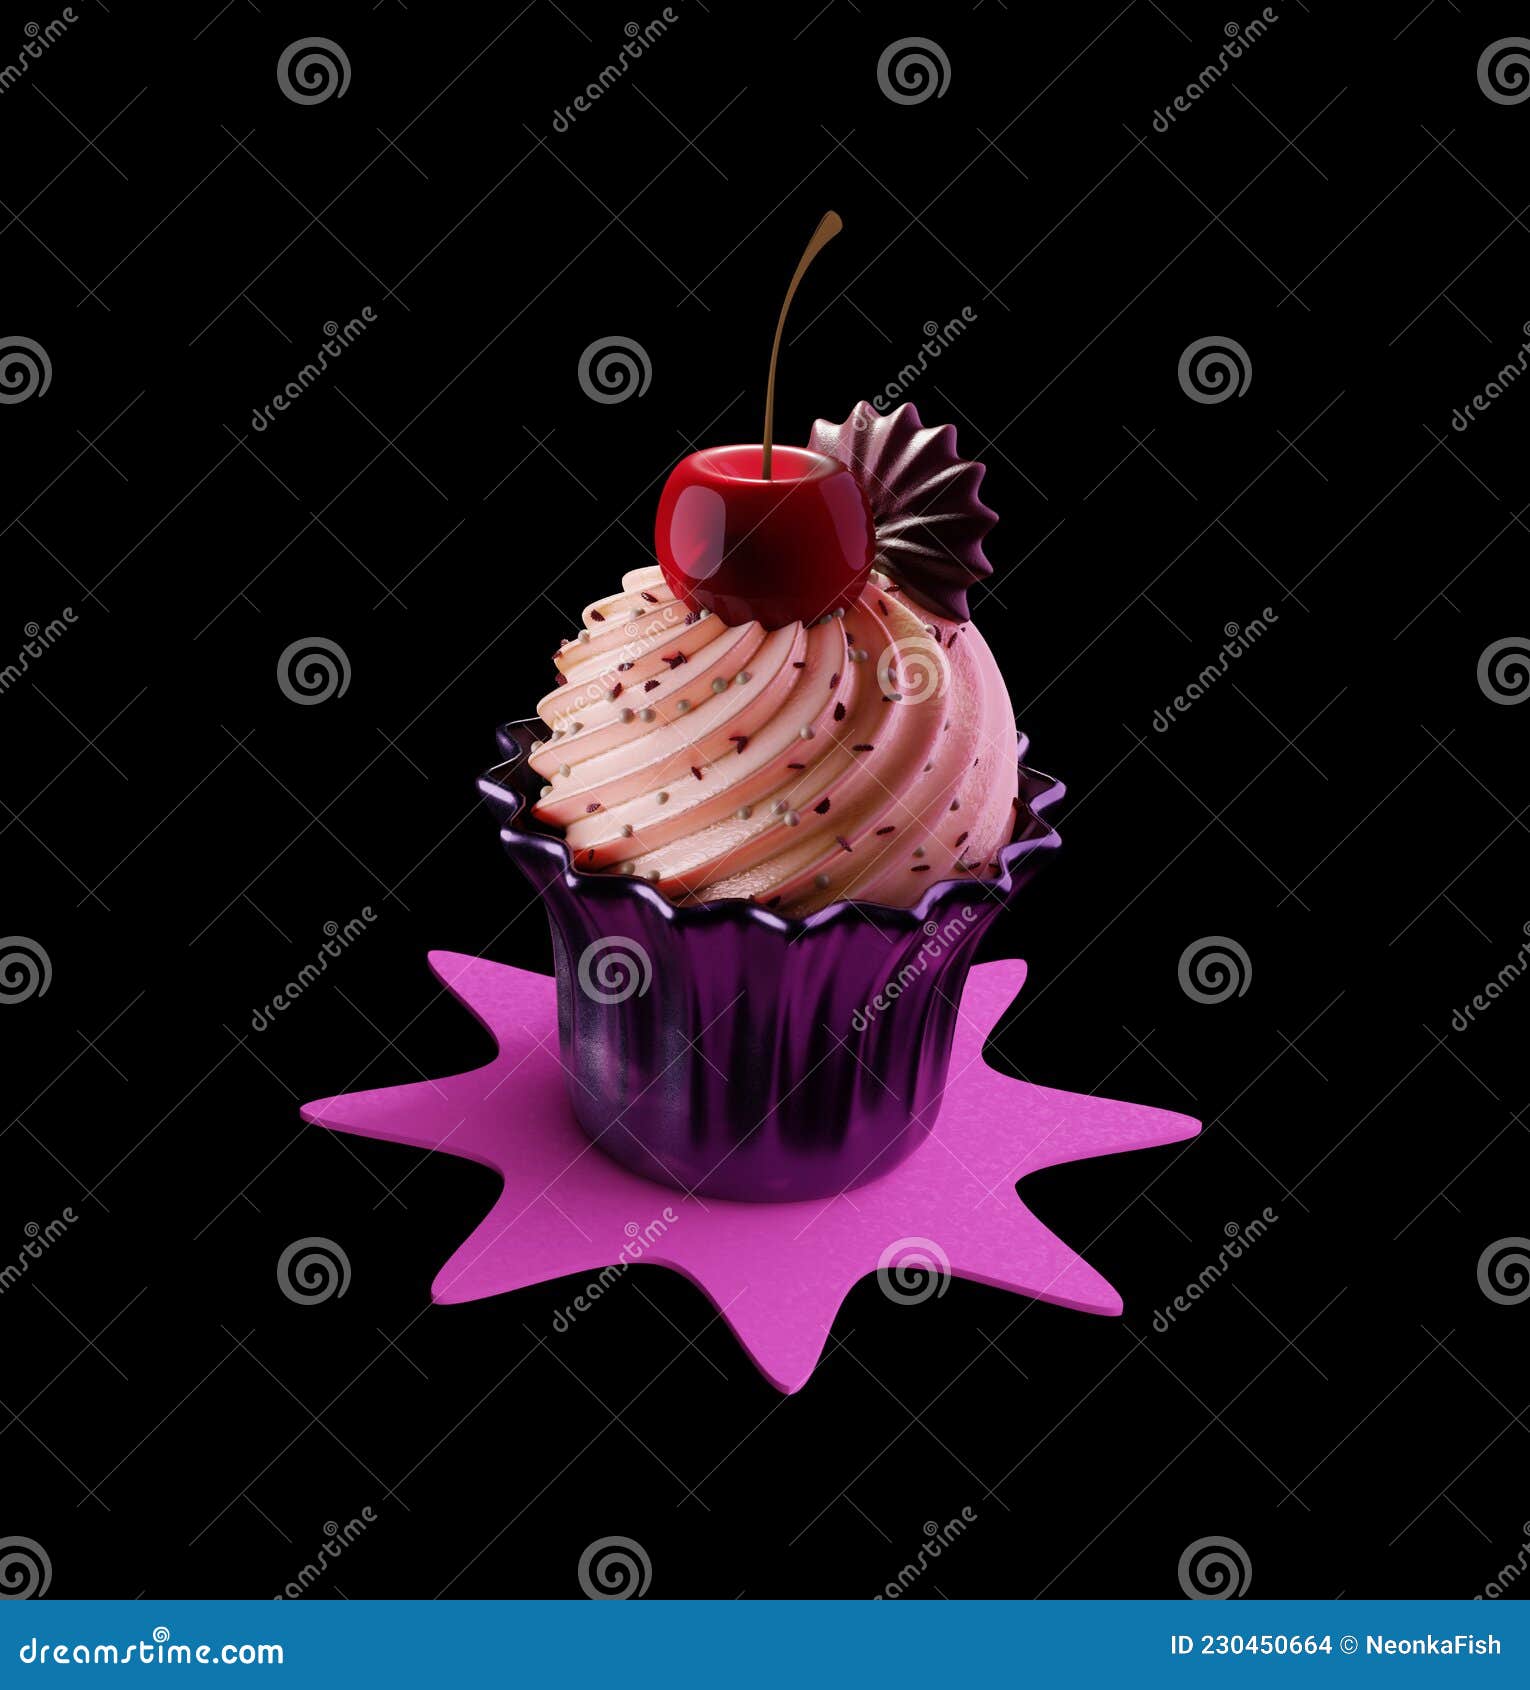 Creamy_cupcake